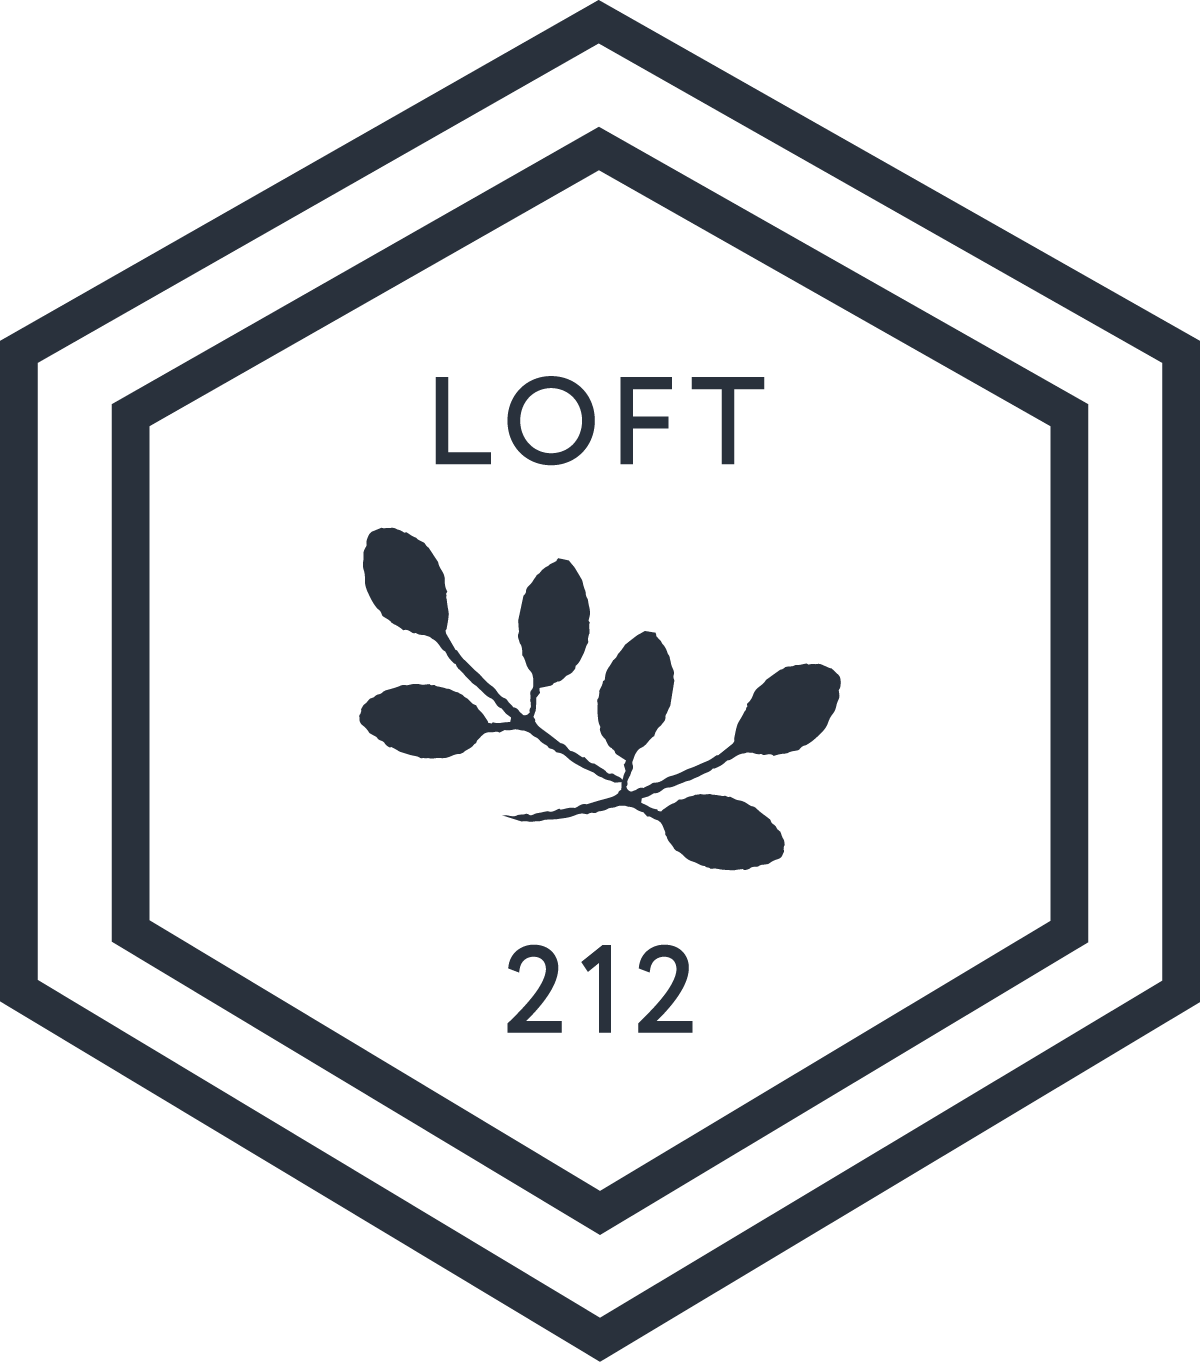 Loft 212 Design